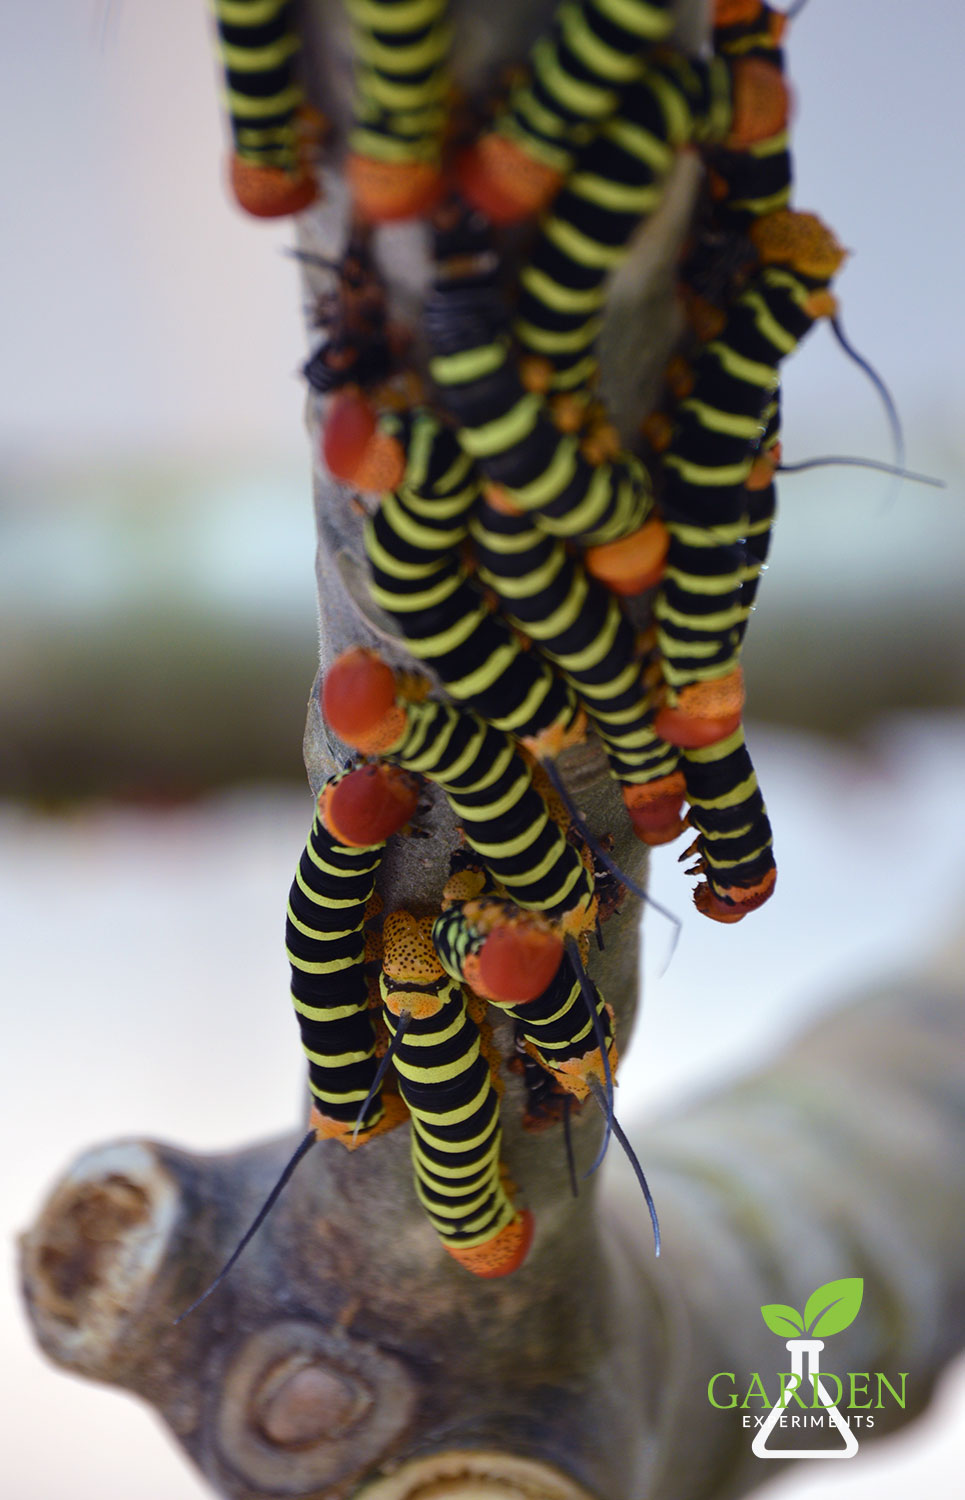 Frangipani hornworm caterpillars on a tree limb